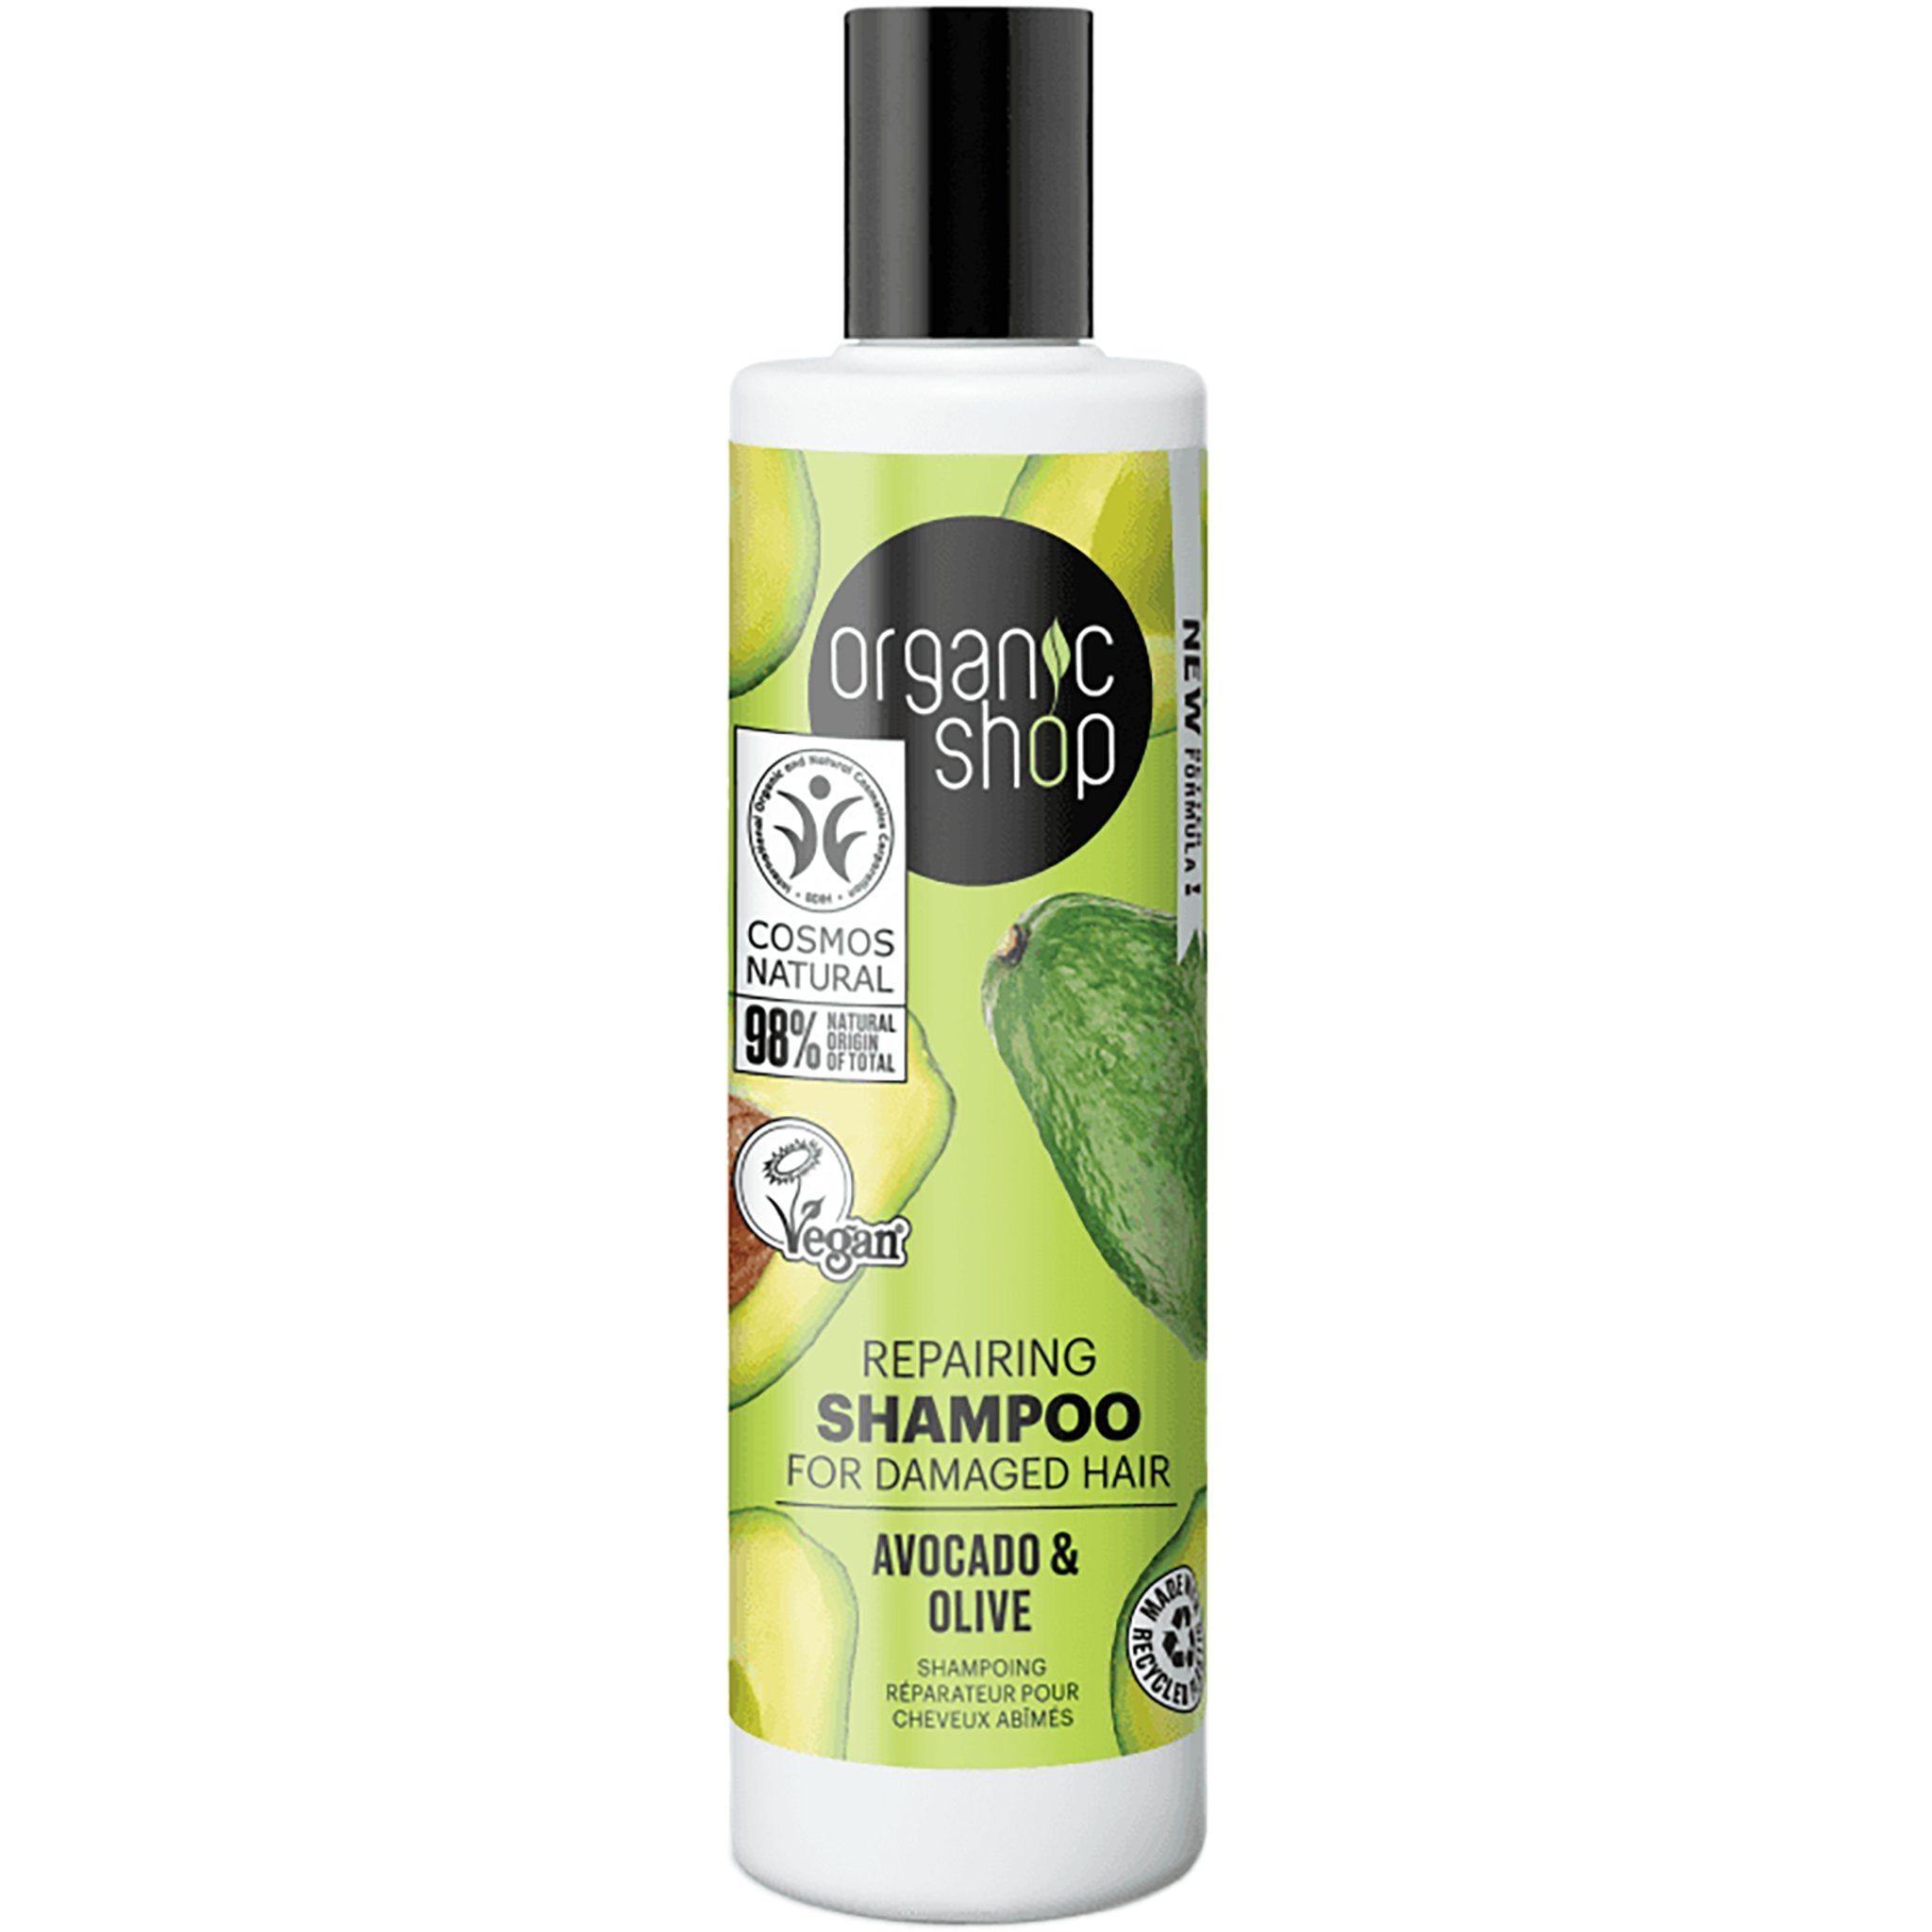 NEW Avocado & Olive Repairing Shampoo - mypure.co.uk